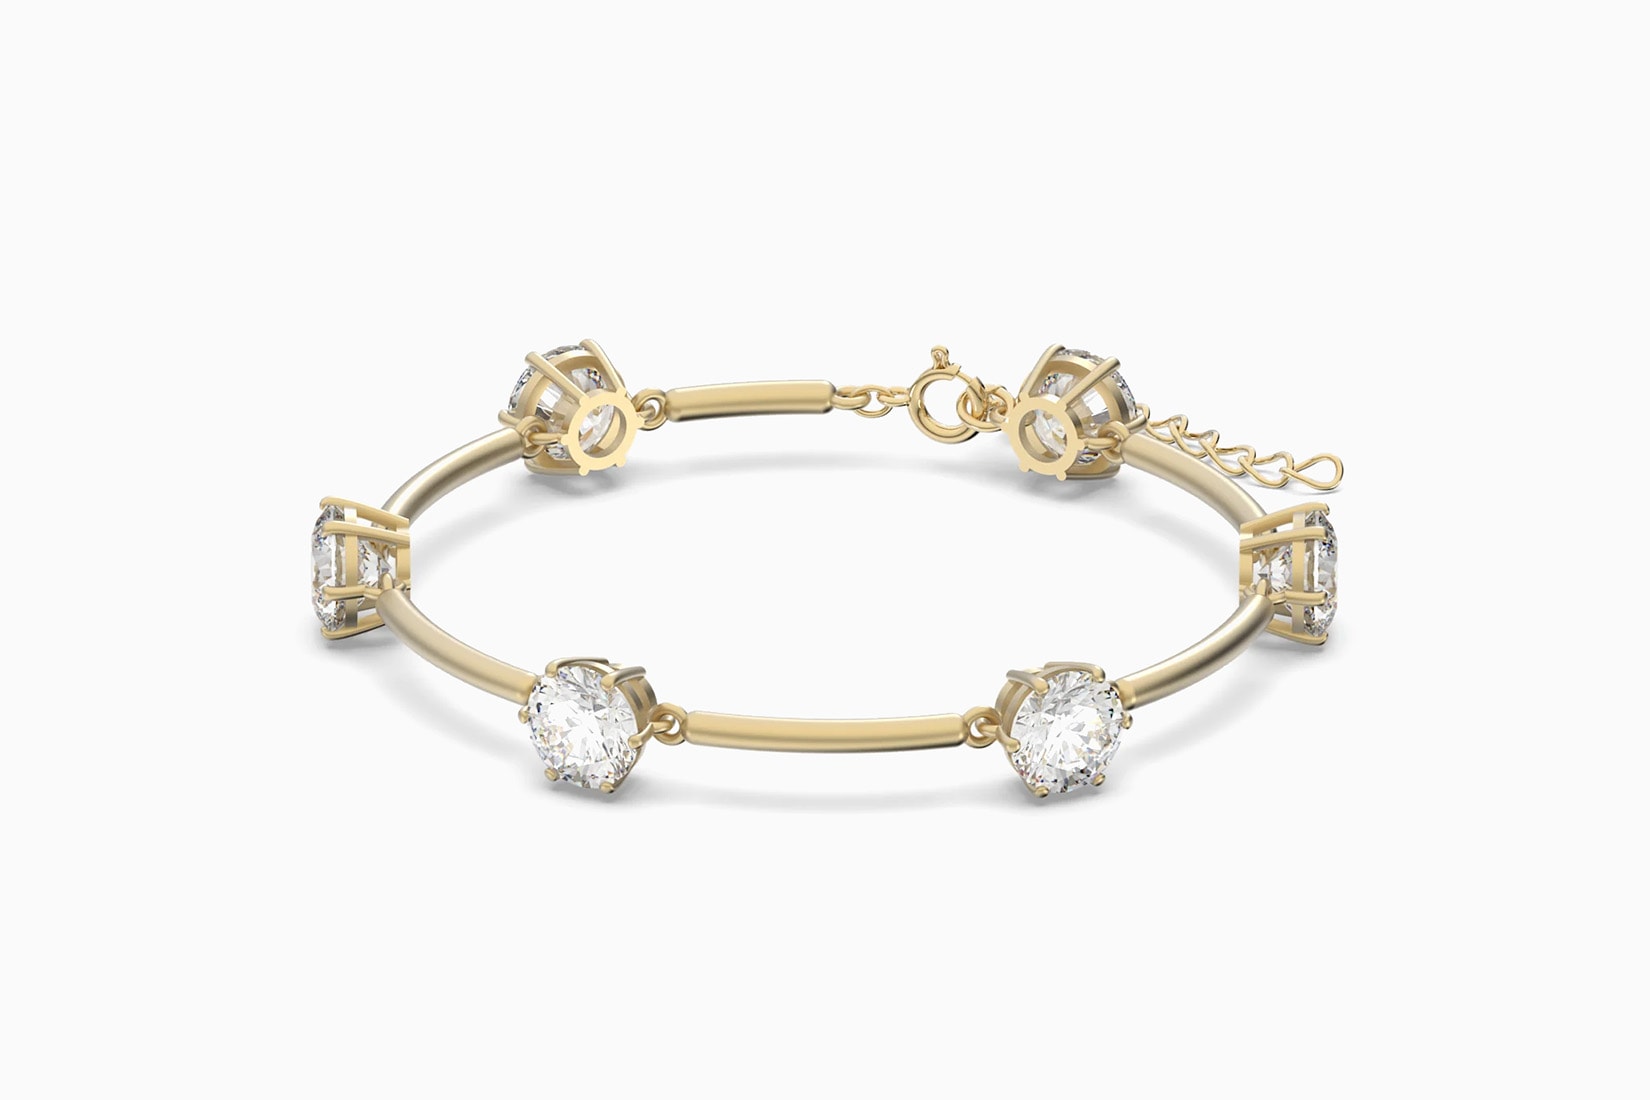 Swarovski constella bracelet collection review - Luxe Digital